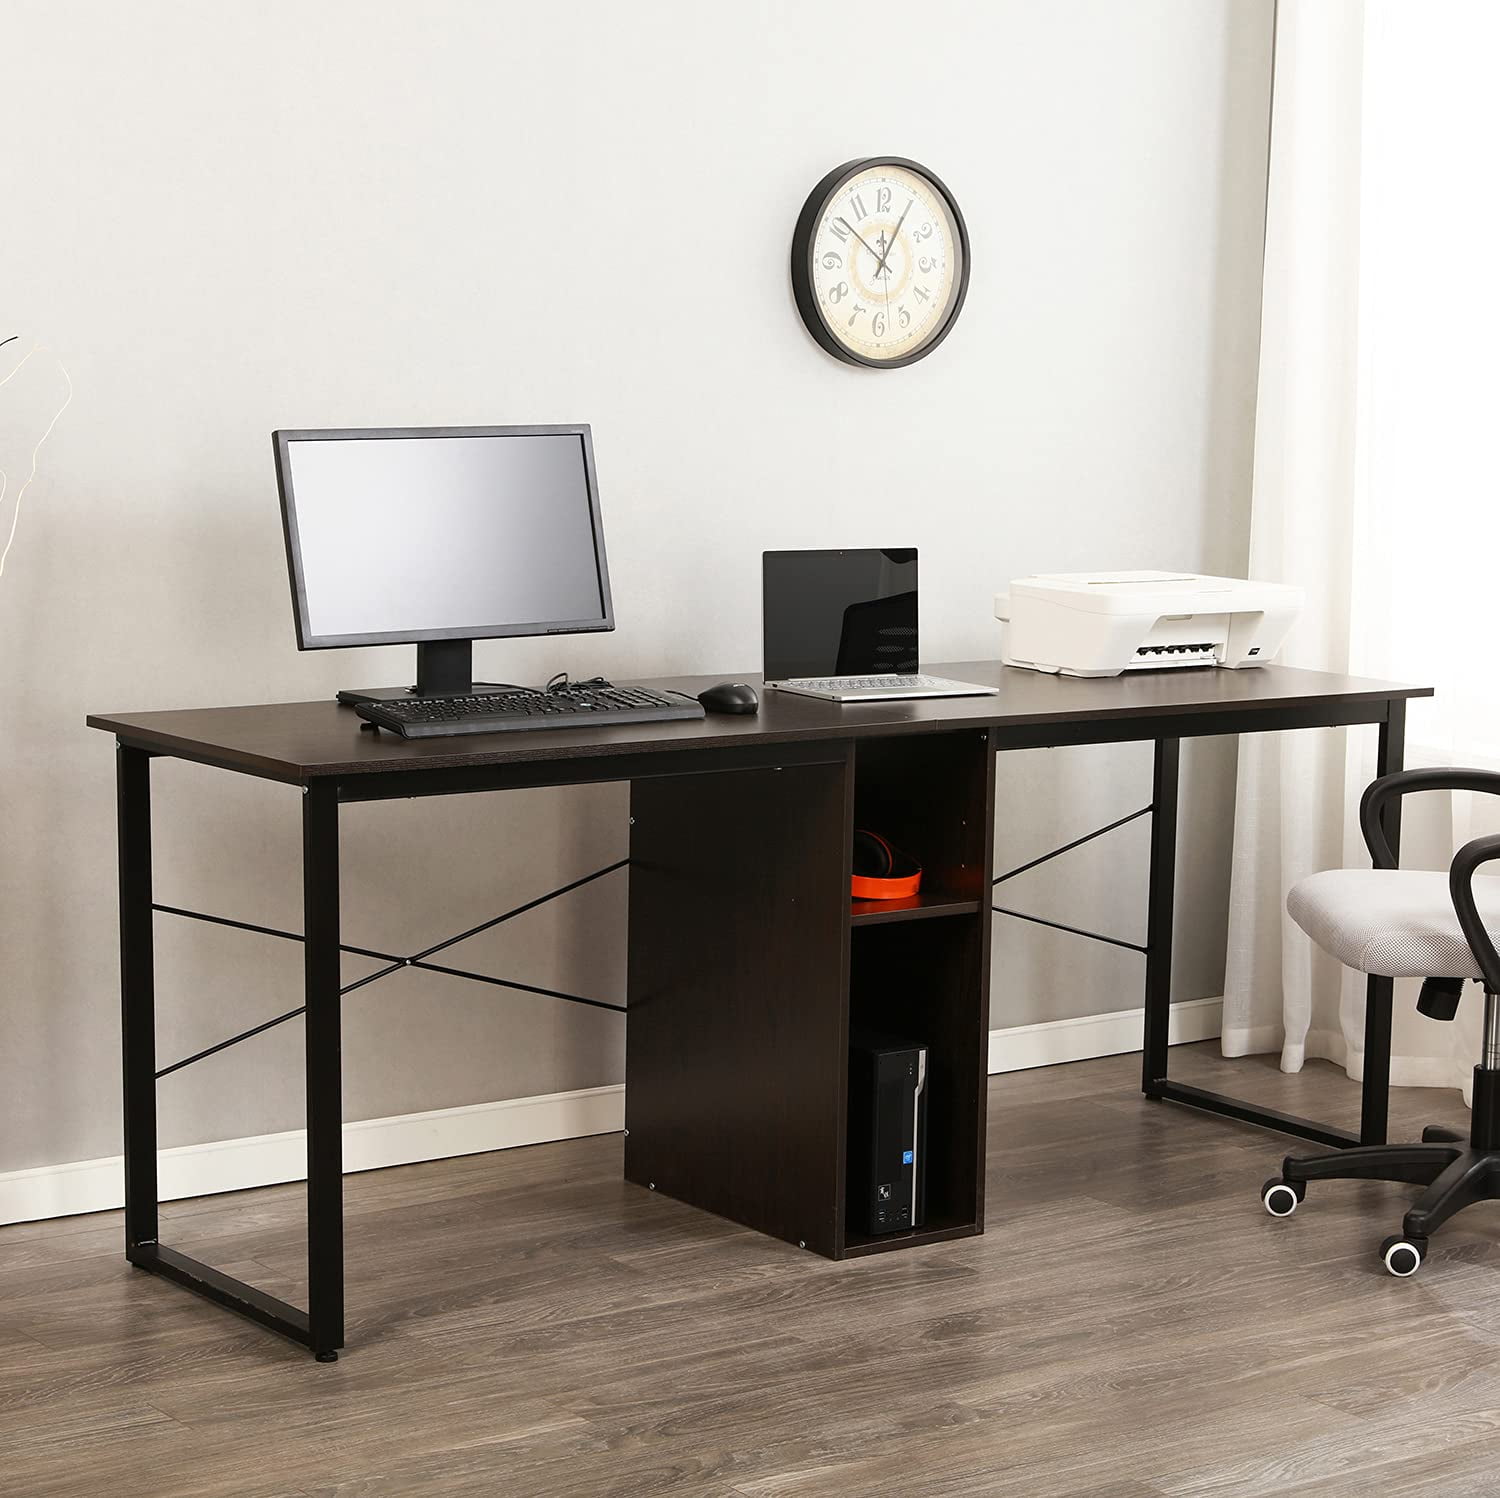 2-Person Computer Desk Home/Office Desk/Writing Desk with Shared Storage Walnut DX-244-WA Soges 78.7 Large Double Workstation Desk 